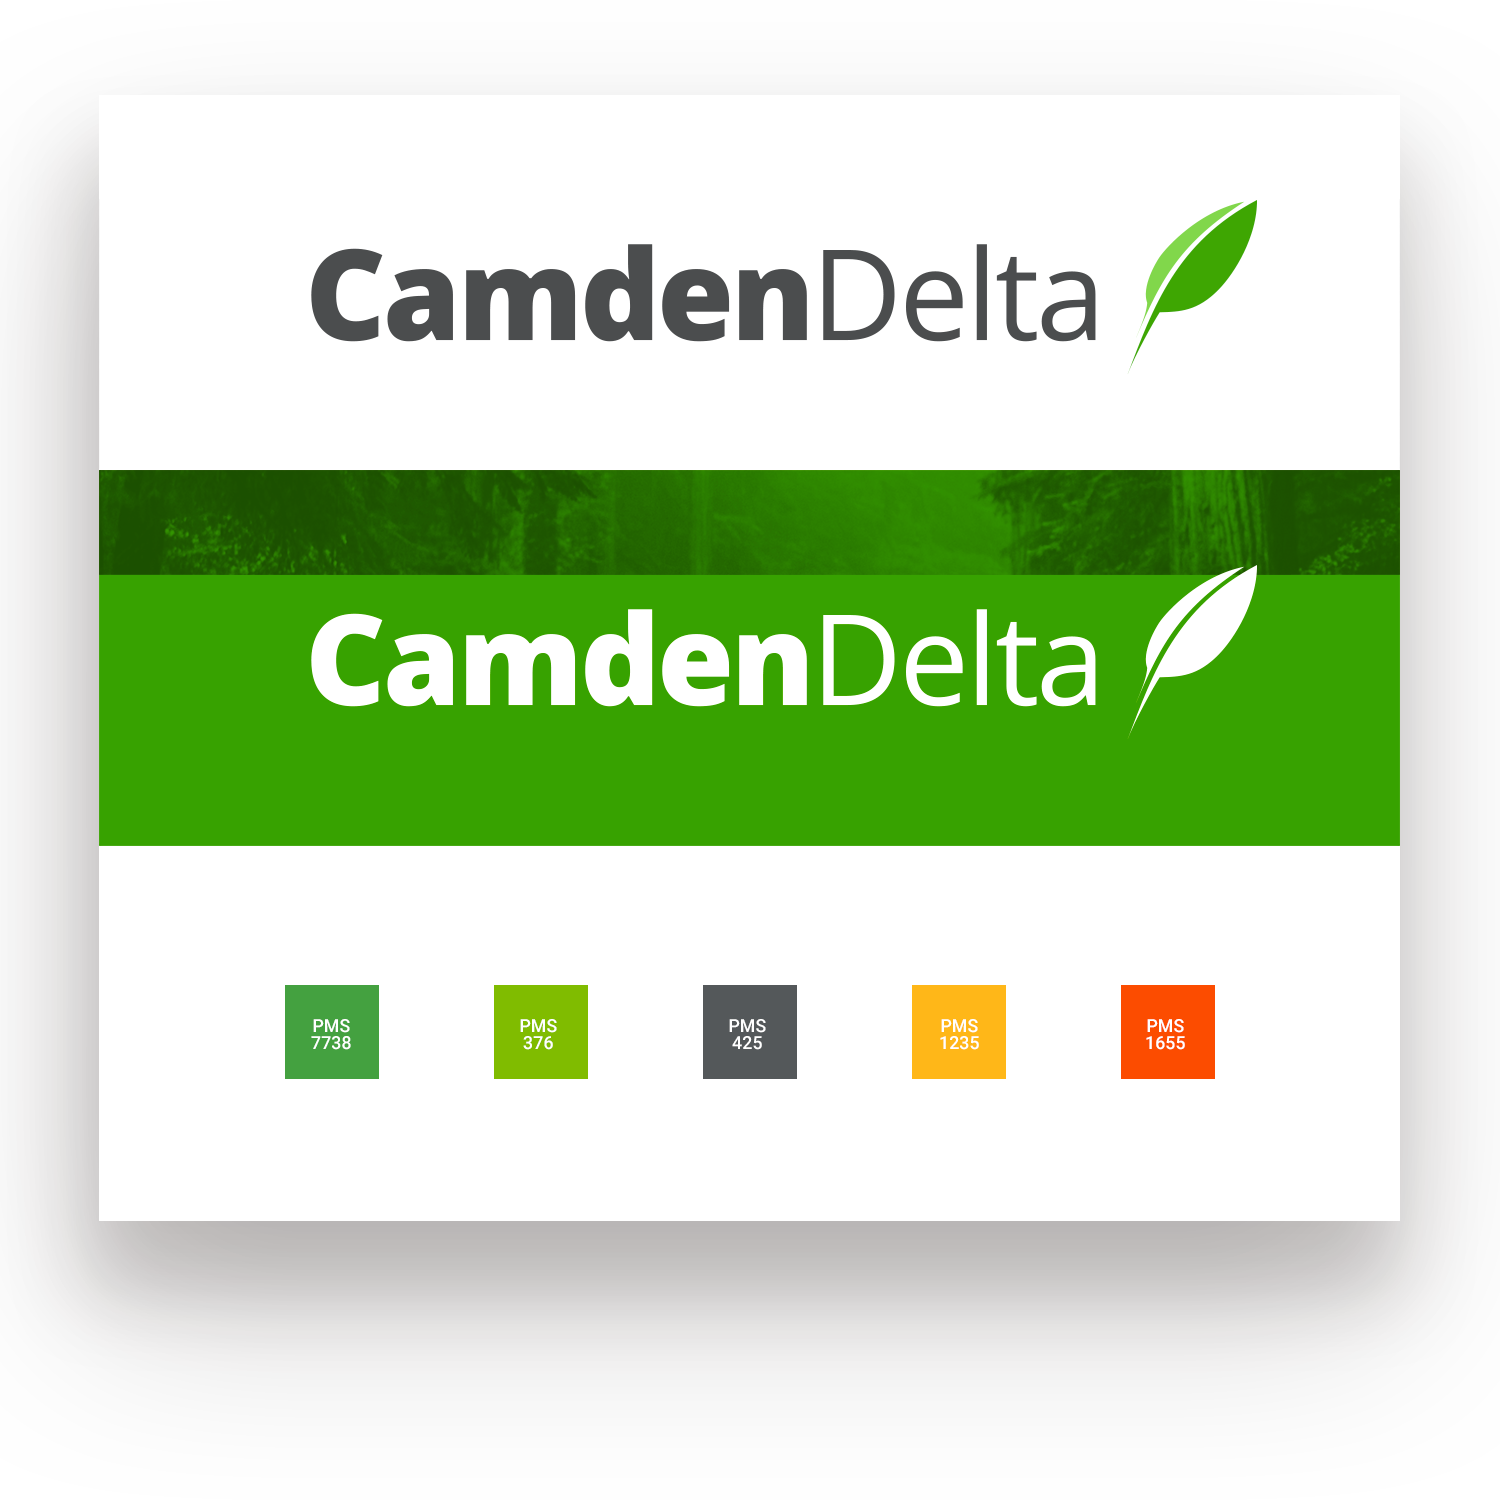 Camden Delta Branding and Colors